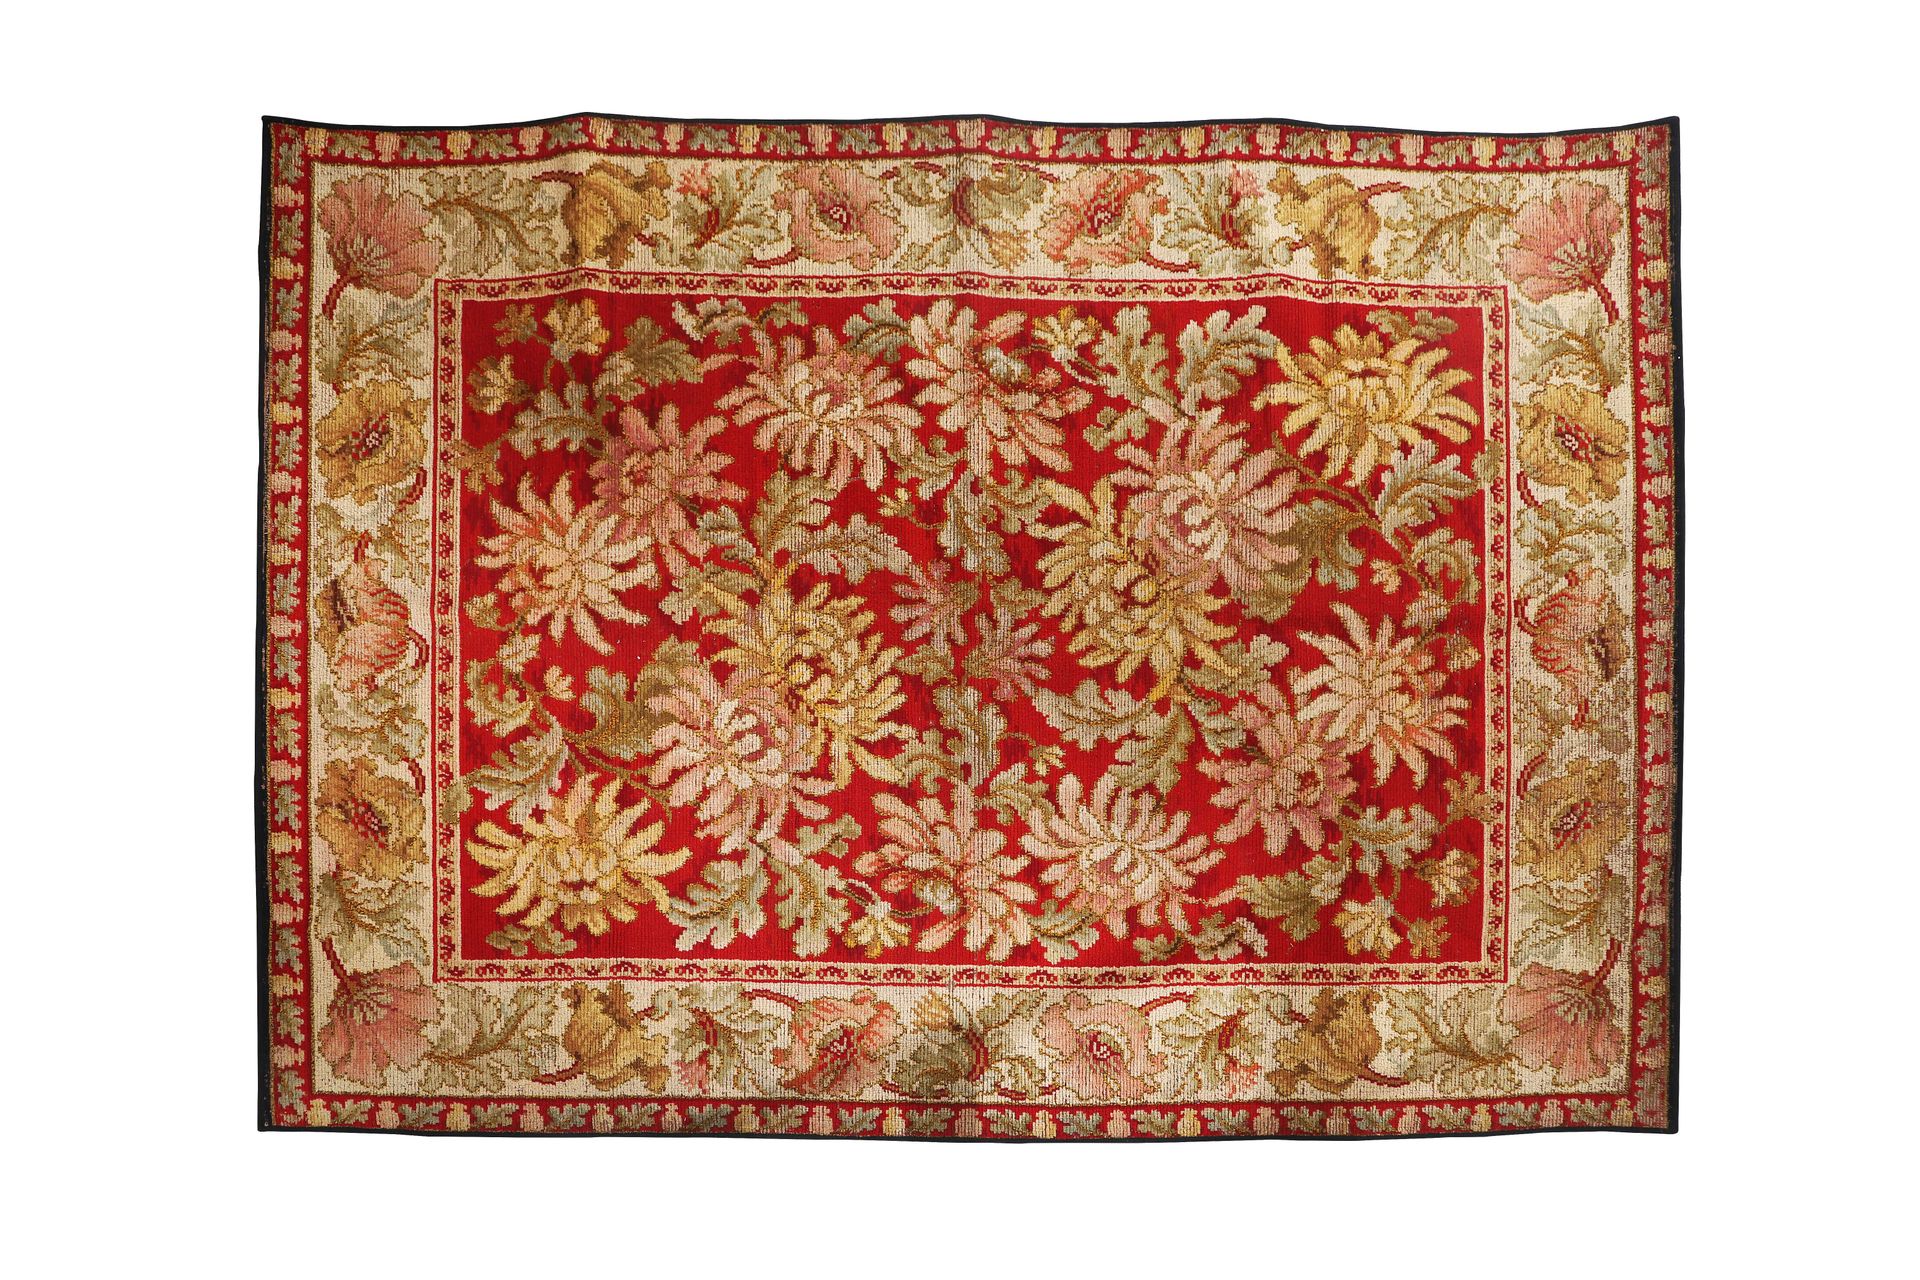 Null 地毯式天鹅绒桌挂或壁挂，19世纪下半叶，多色羊毛提花织品，红色背景上有菊花，275 x 190厘米。